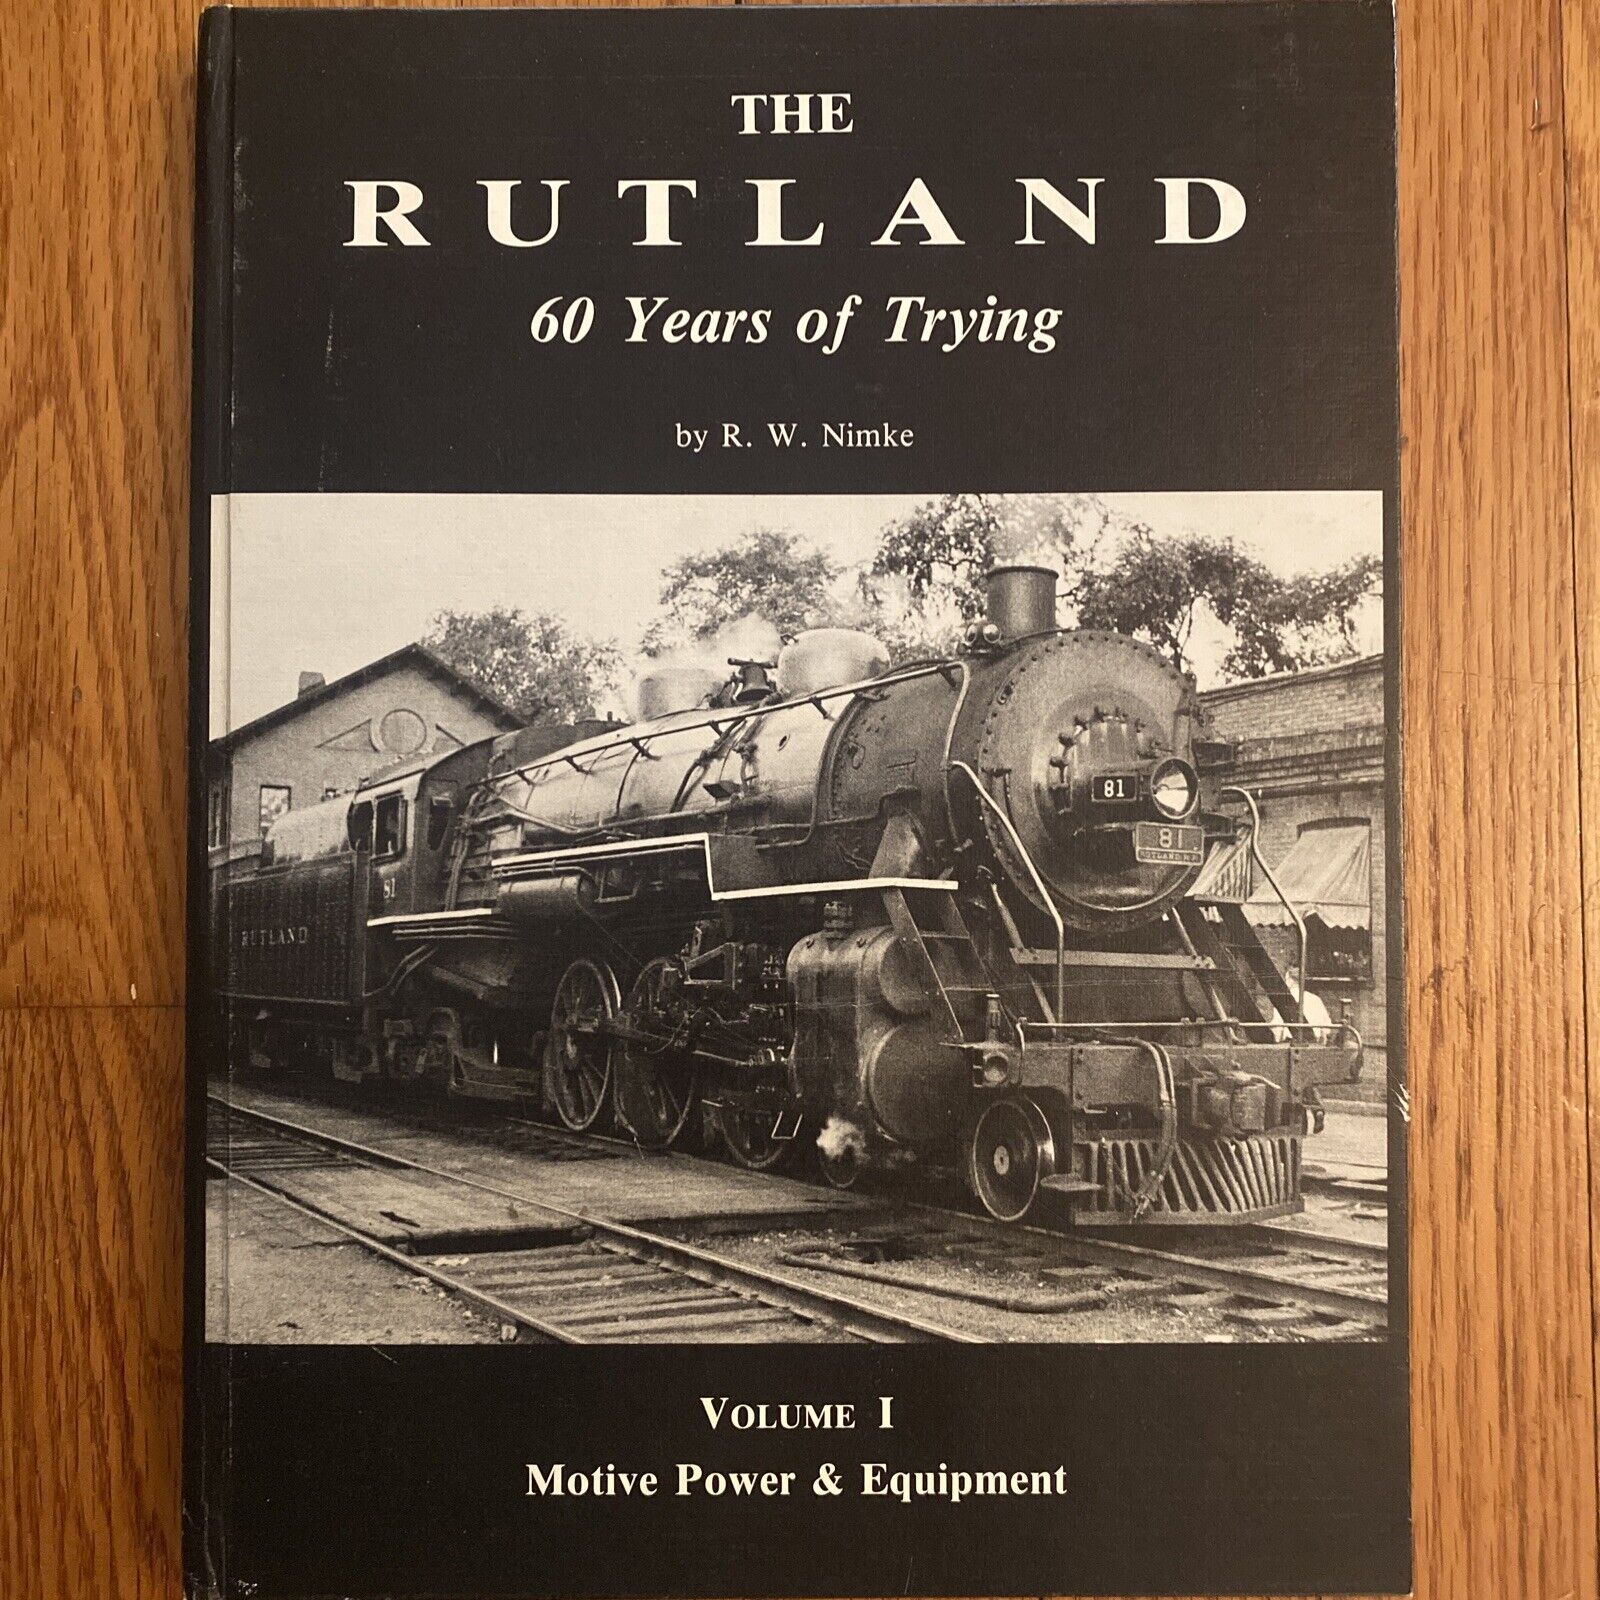 Rutland, The 60 Years of Trying Volume I Motive Power & Equipment  by R W Nimke